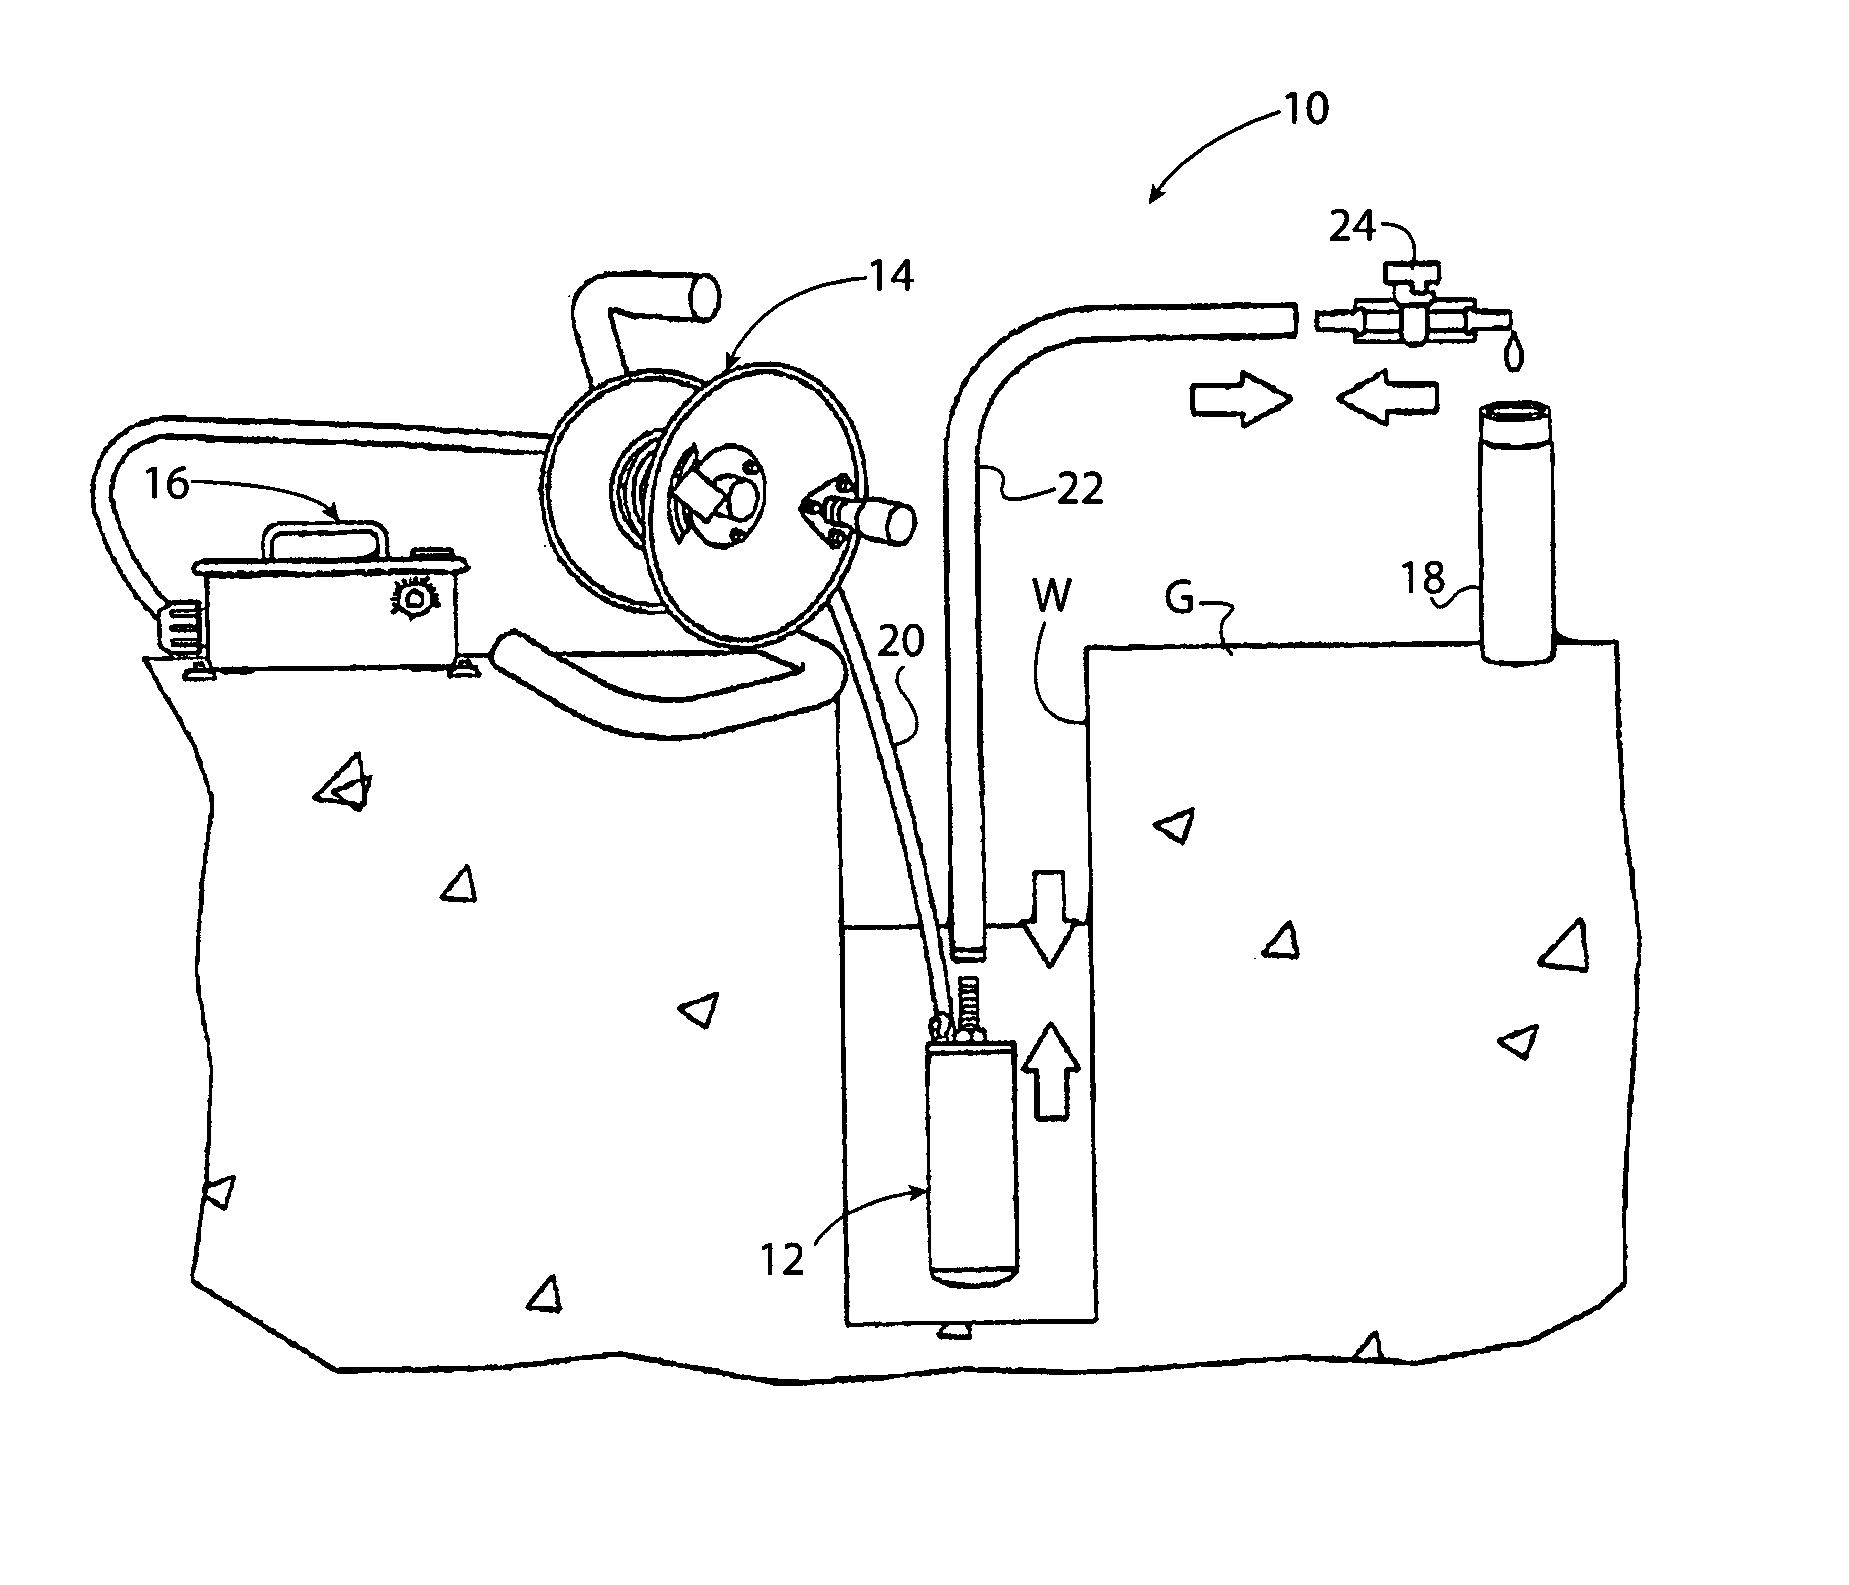 Submersible pump